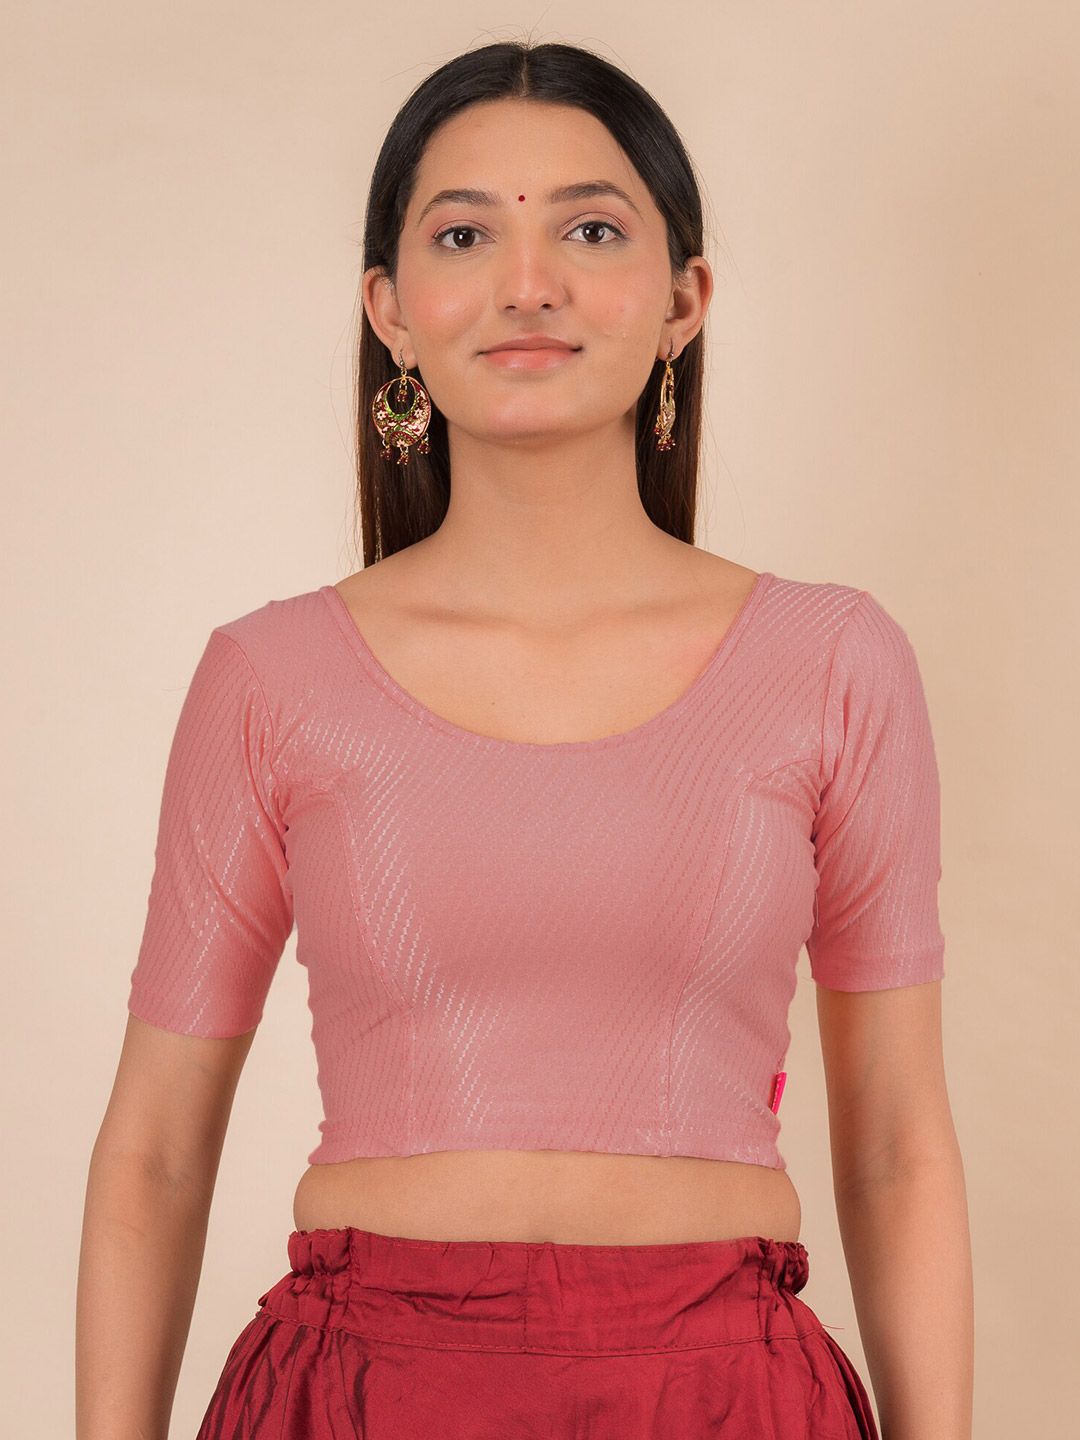 Bindigasm's Advi Woven Design Stretchable Cotton Saree Blouse Price in India